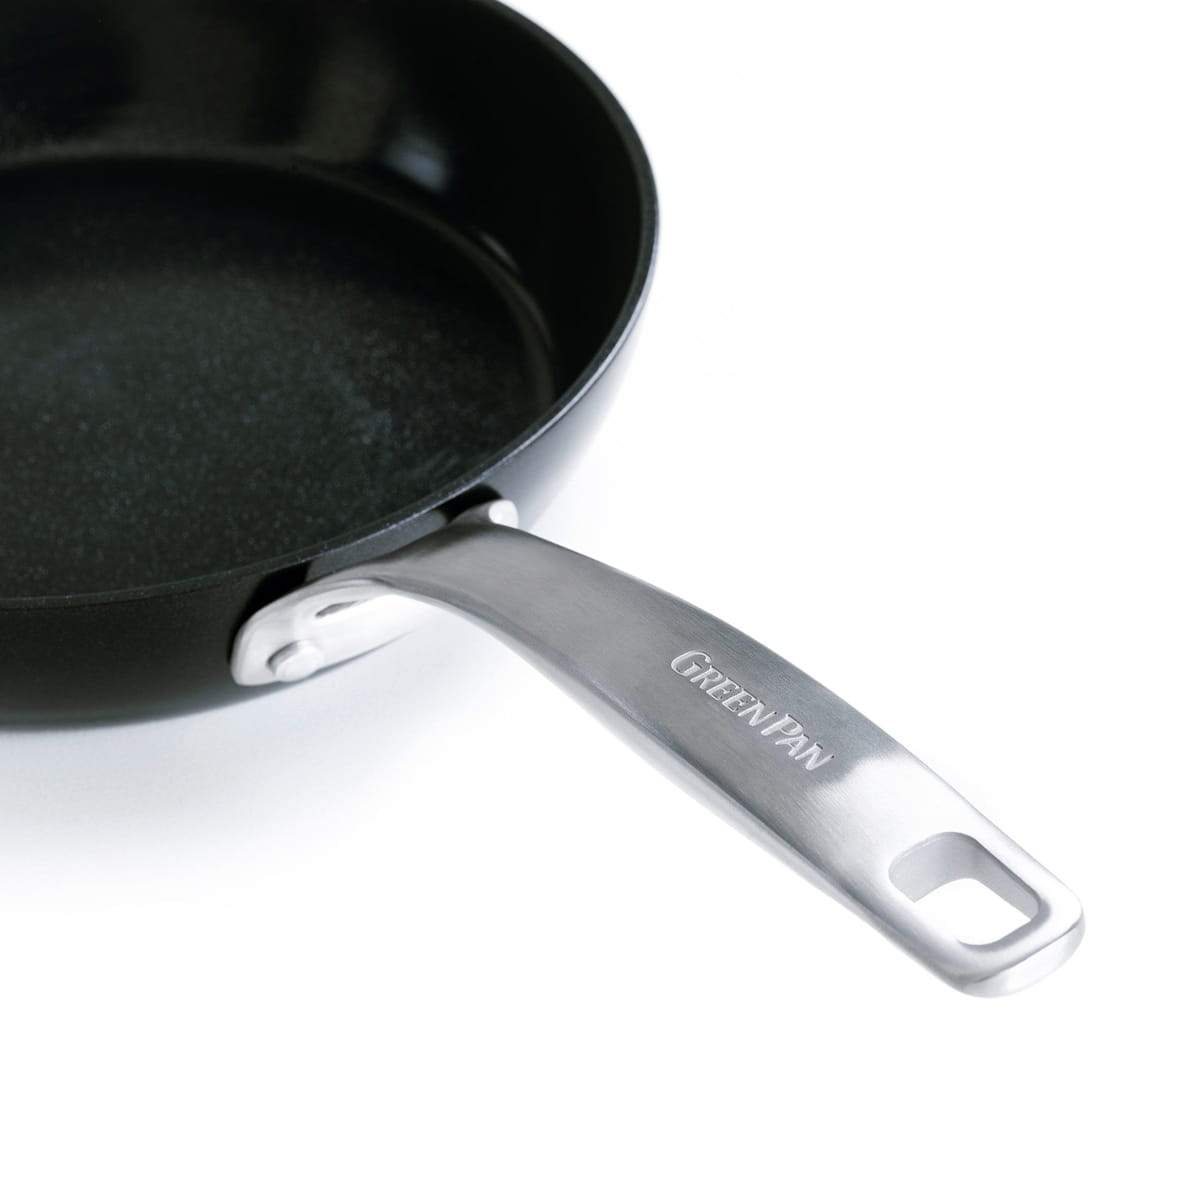 CC003108-001 - Copenhagen Frying Pan, Black - 24cm - Product Image 3